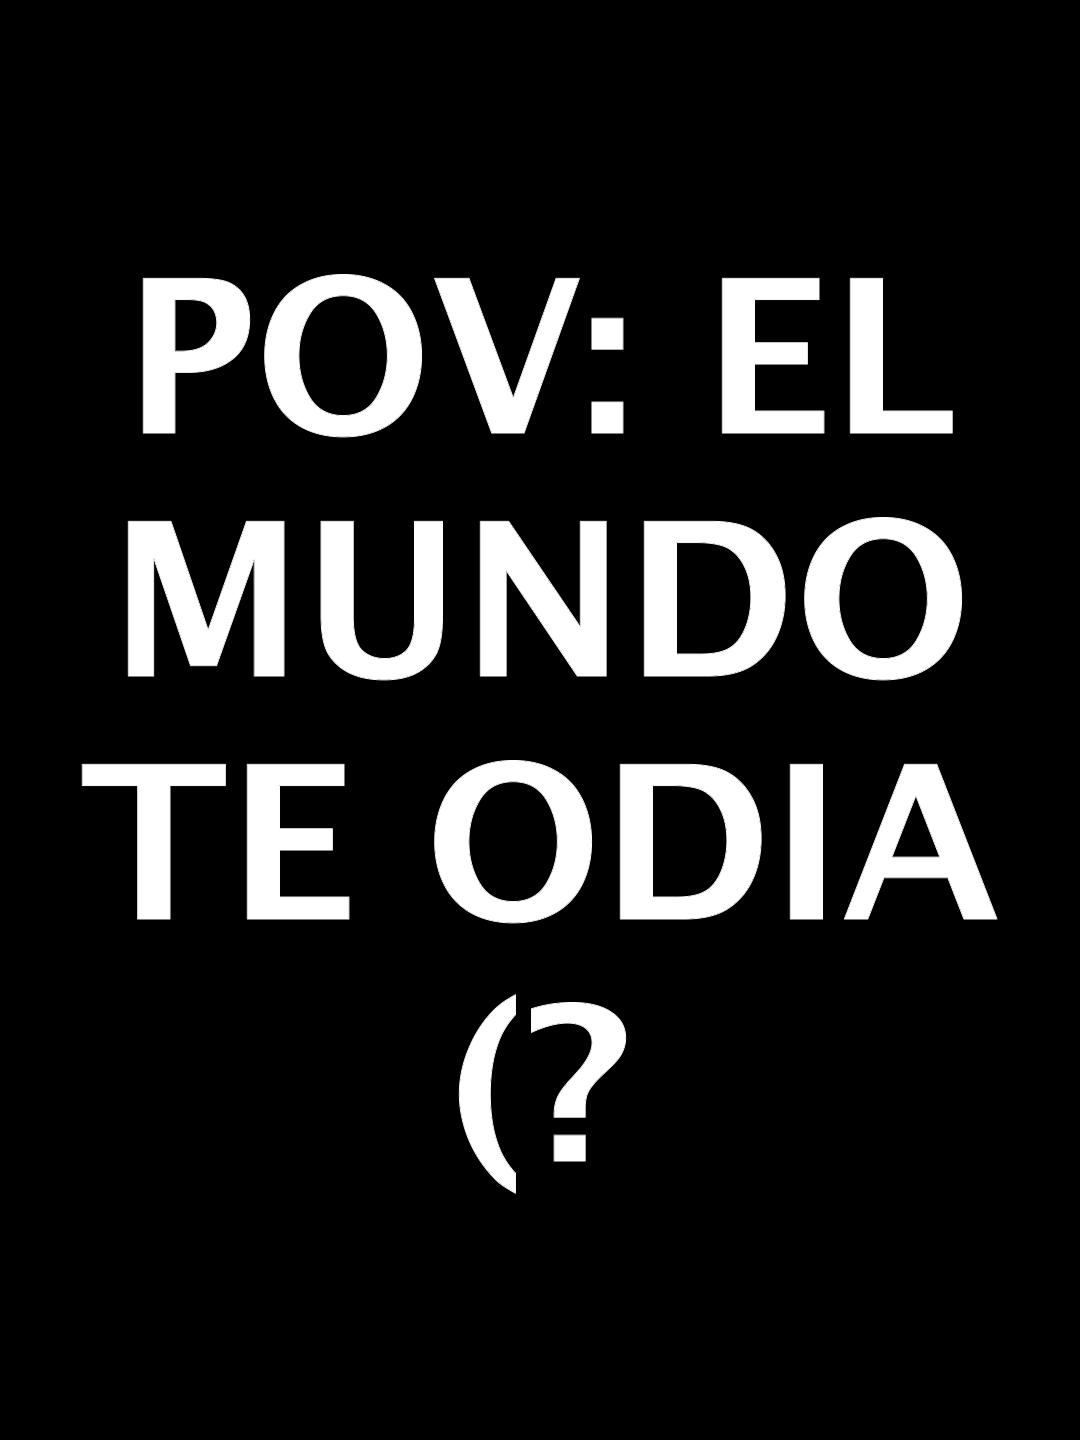 10-19 forzado jxjxjx #dovuxlife #dovuxclips #dovuxliferp #roleplay #gtav #fyp #fypシ #fypシ゚viral #fyppppppppppppppppppppppp #ems #emslife #colador #argentina #uruguay #chile #peru #random #twitch #twitchclips #clips